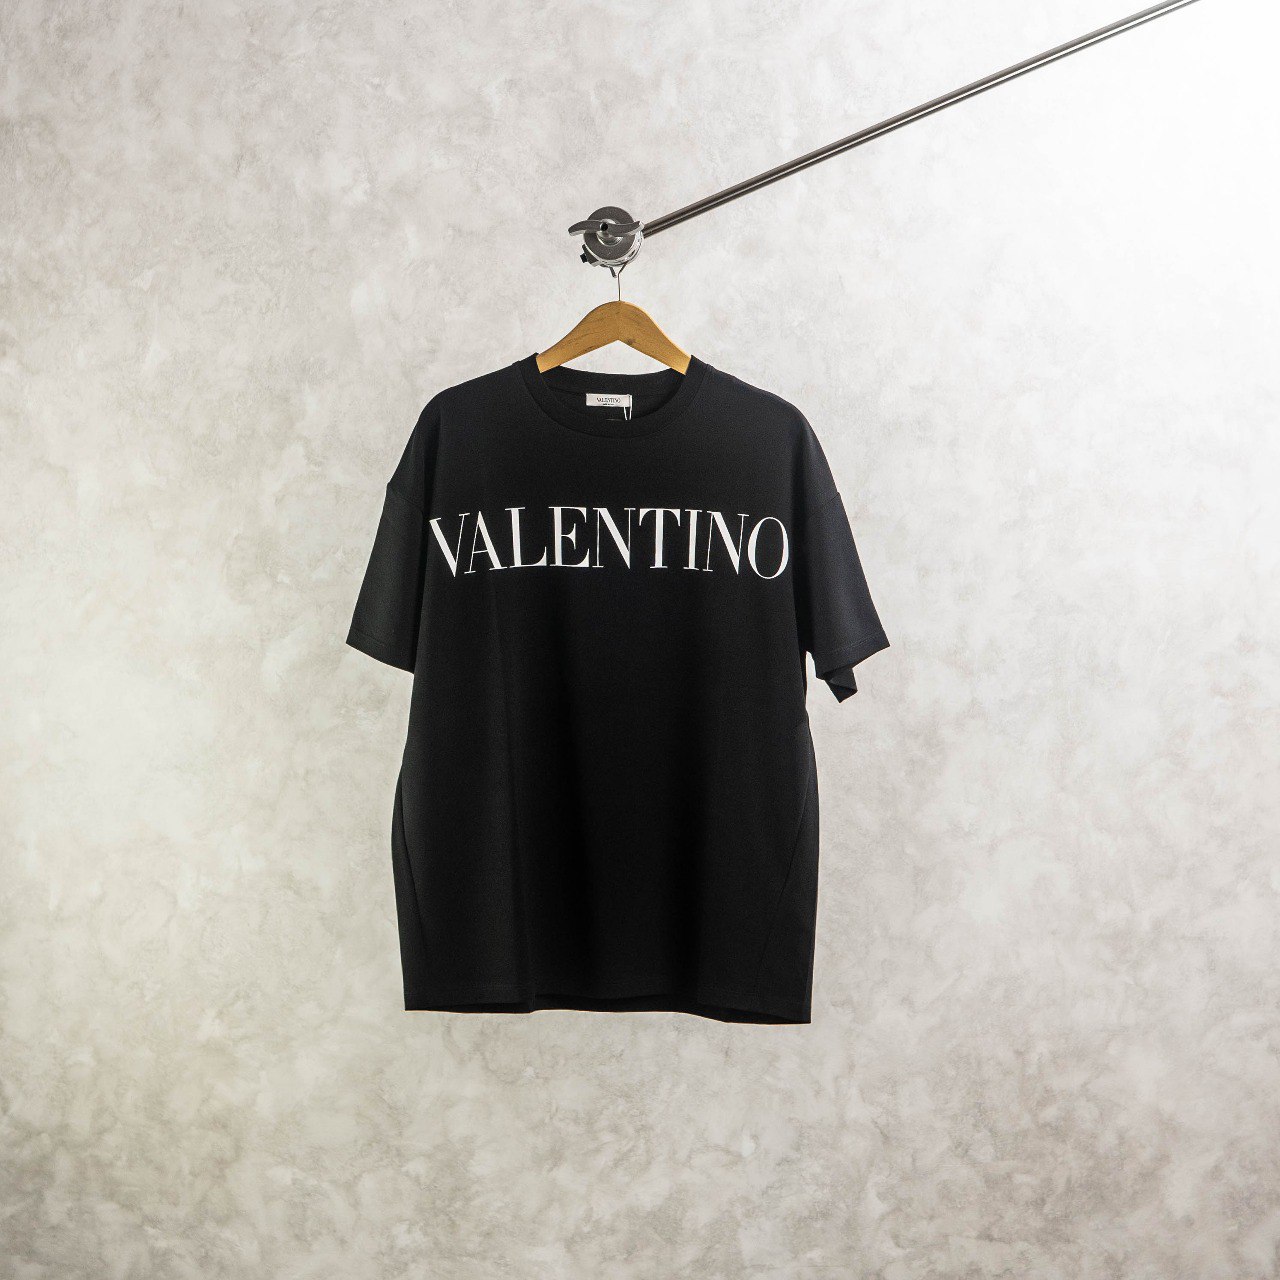 Kaos VALENTINO VLTN TEXT CENTER BLACK Tshirt 100% ORIGINAL - HYPESNEAKER.ID